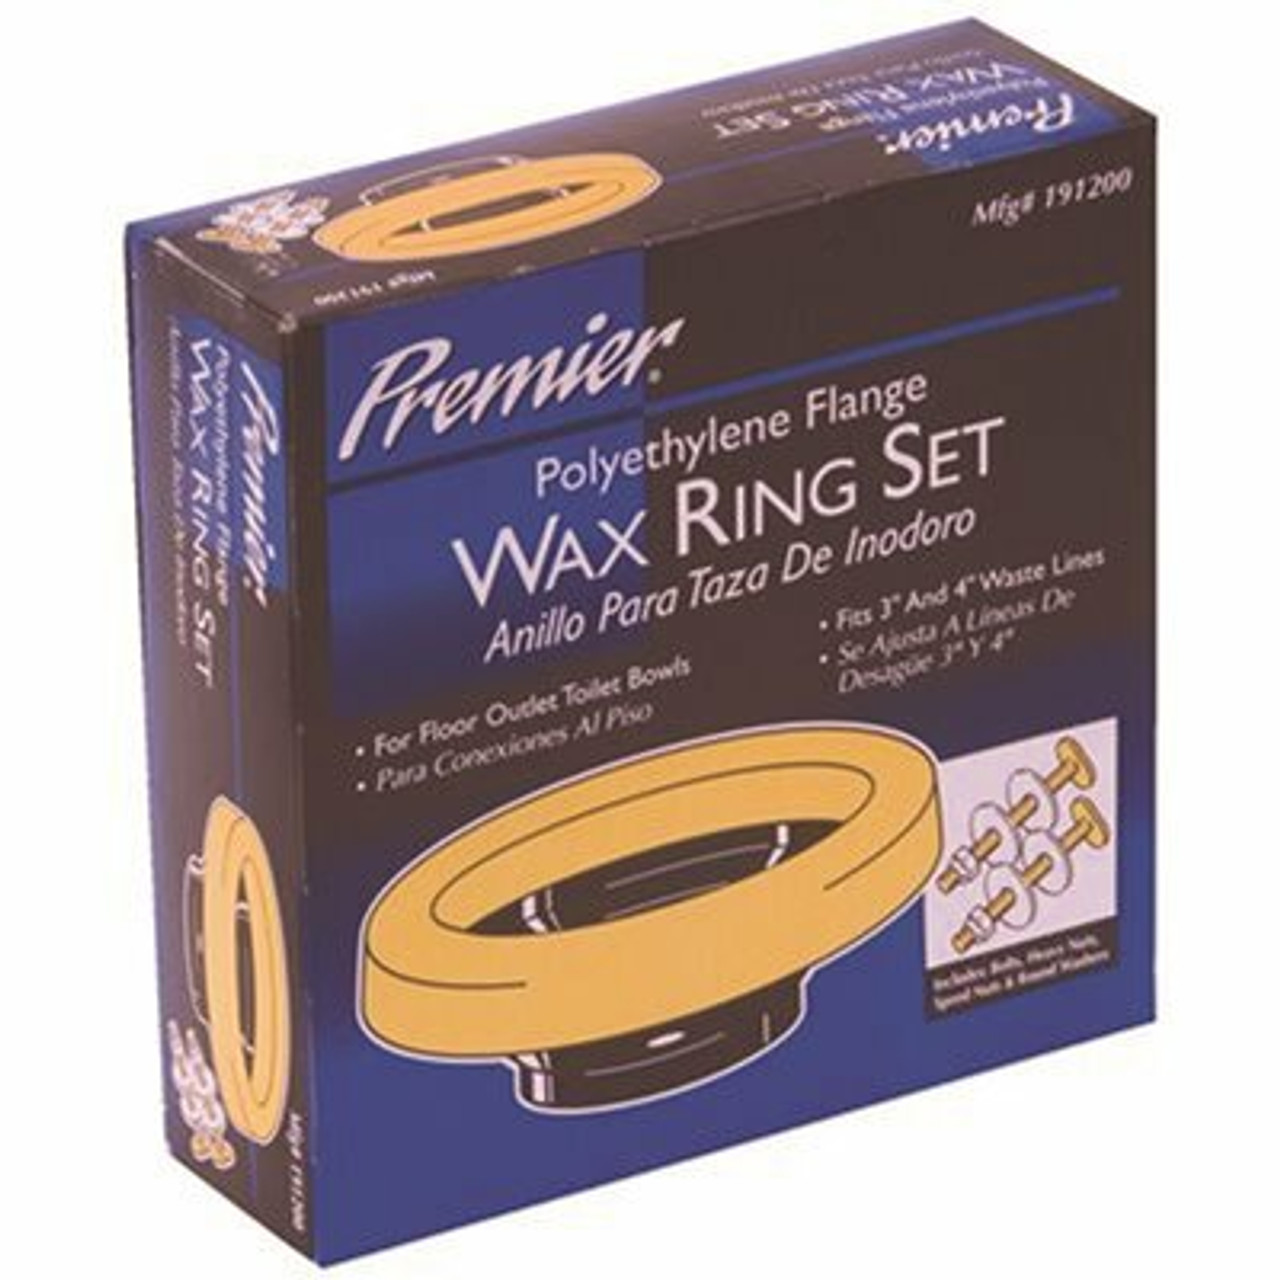 Premier Wax Ring Kit With Polyethylene Flange